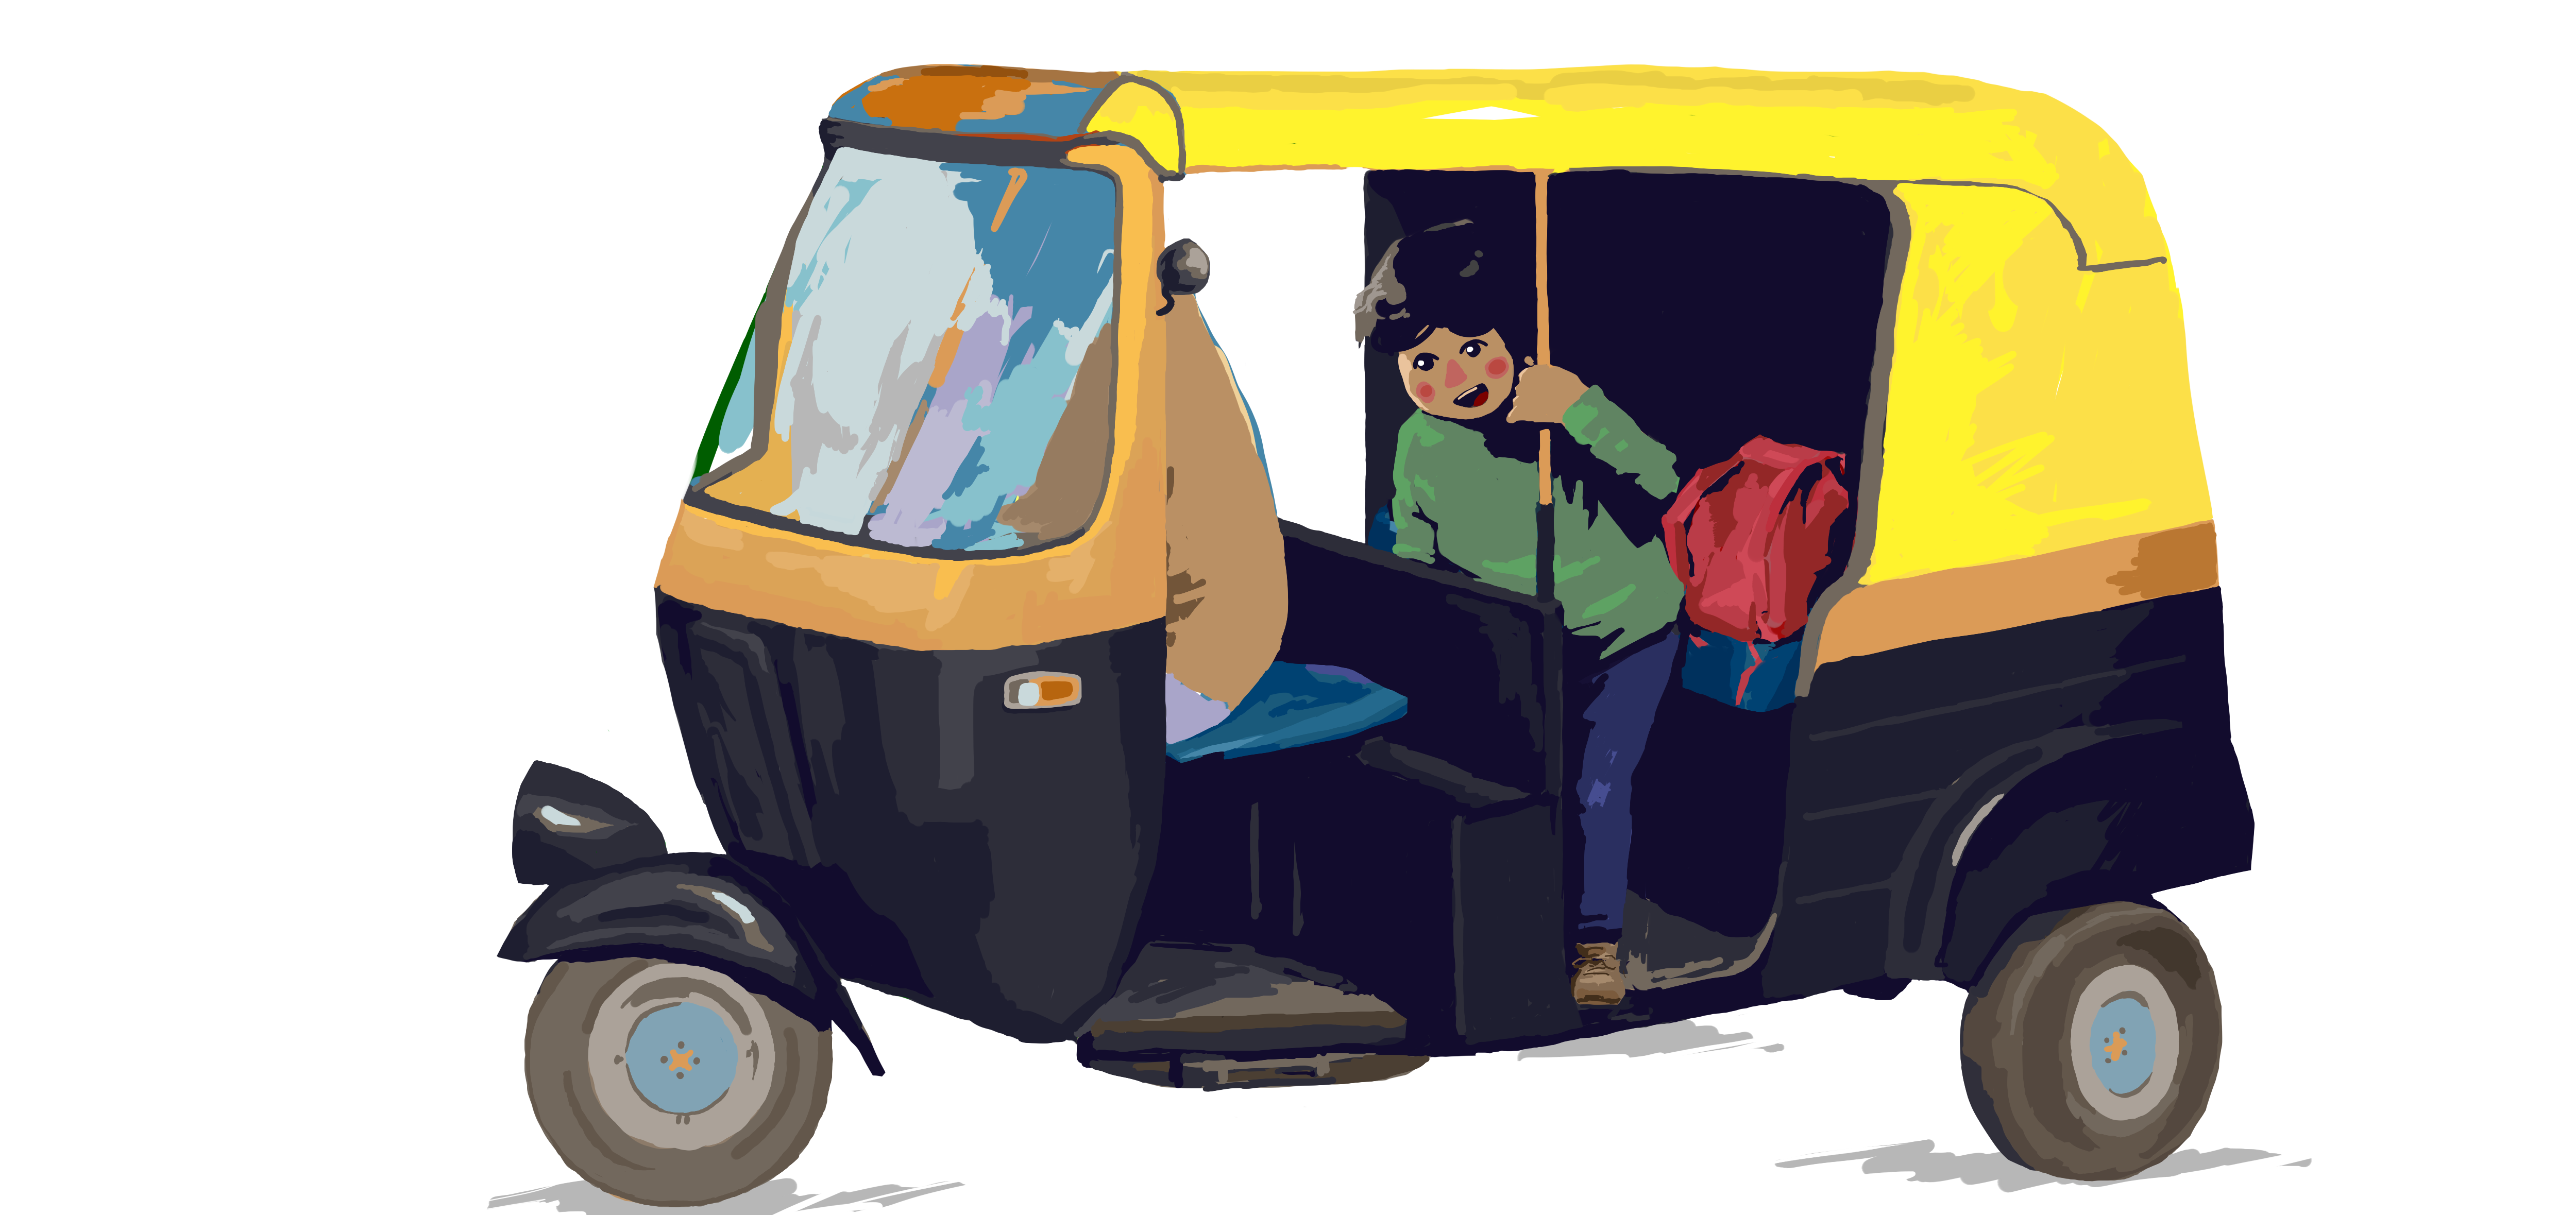 Education Rickshaw – International Teaching in Motion